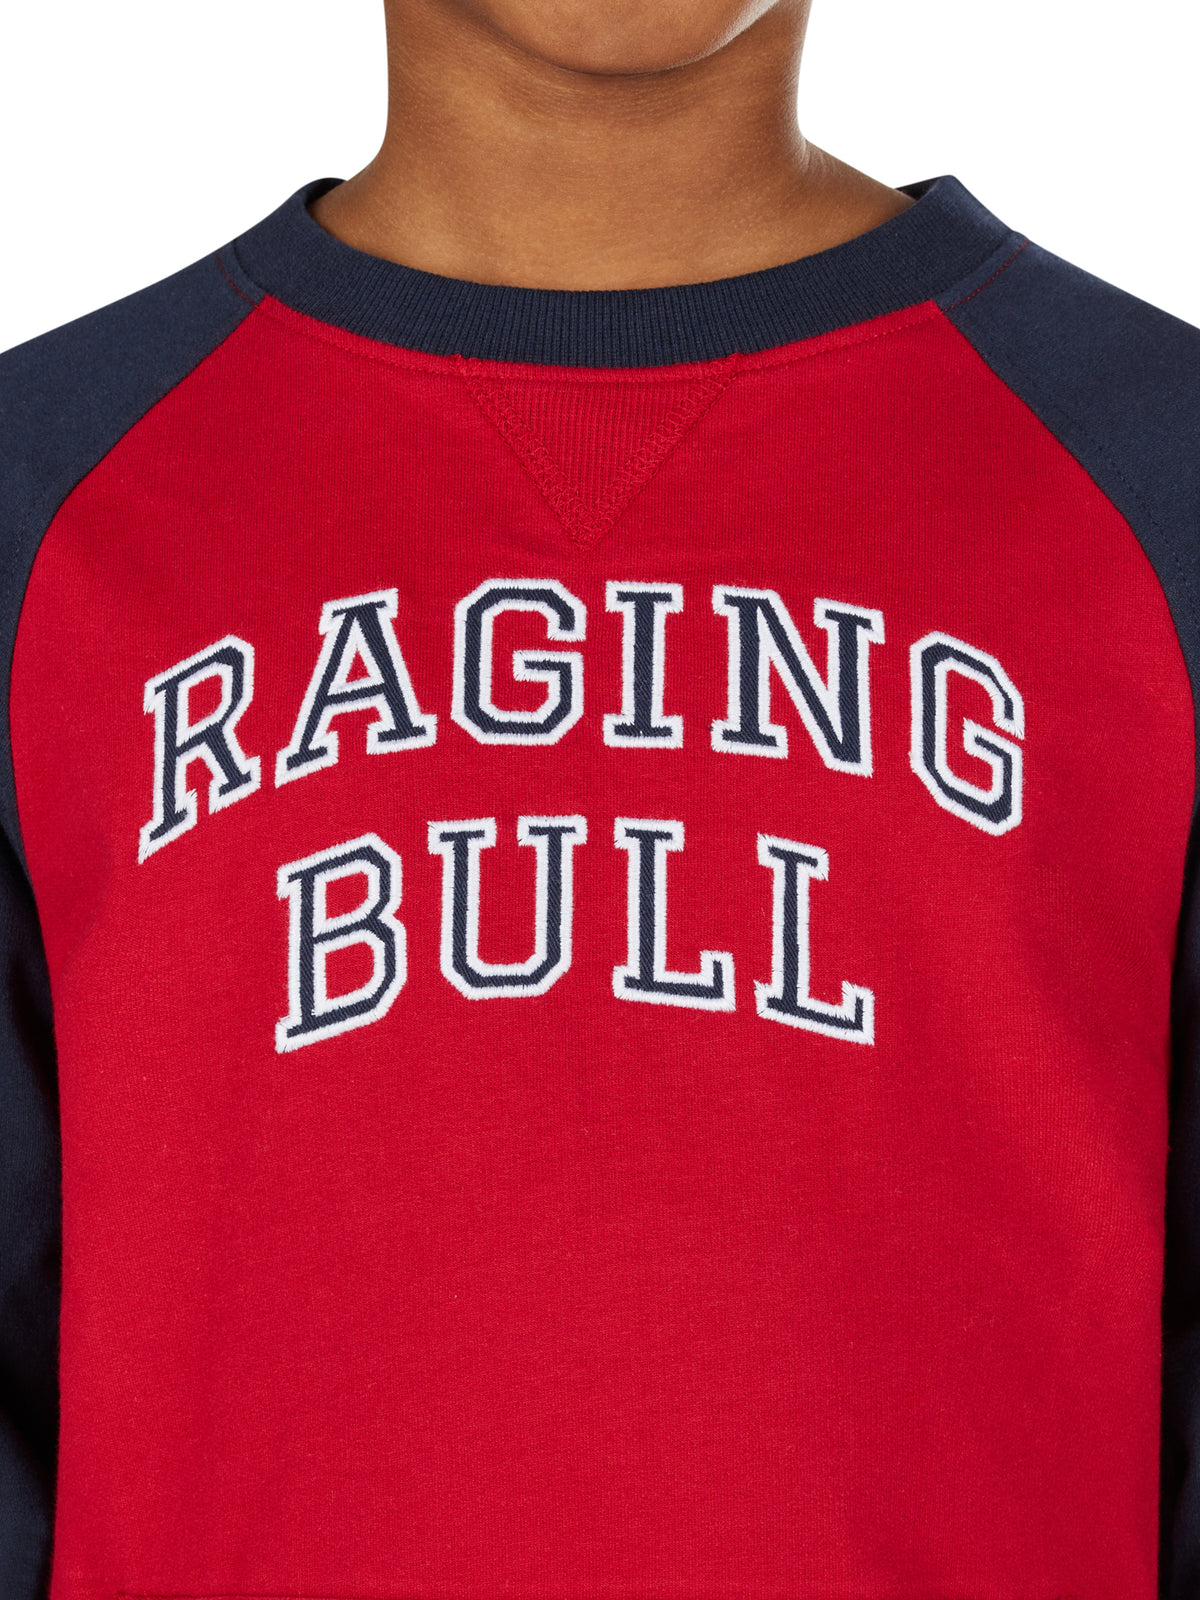 Raging Bull Applique Crew Neck Top - Red